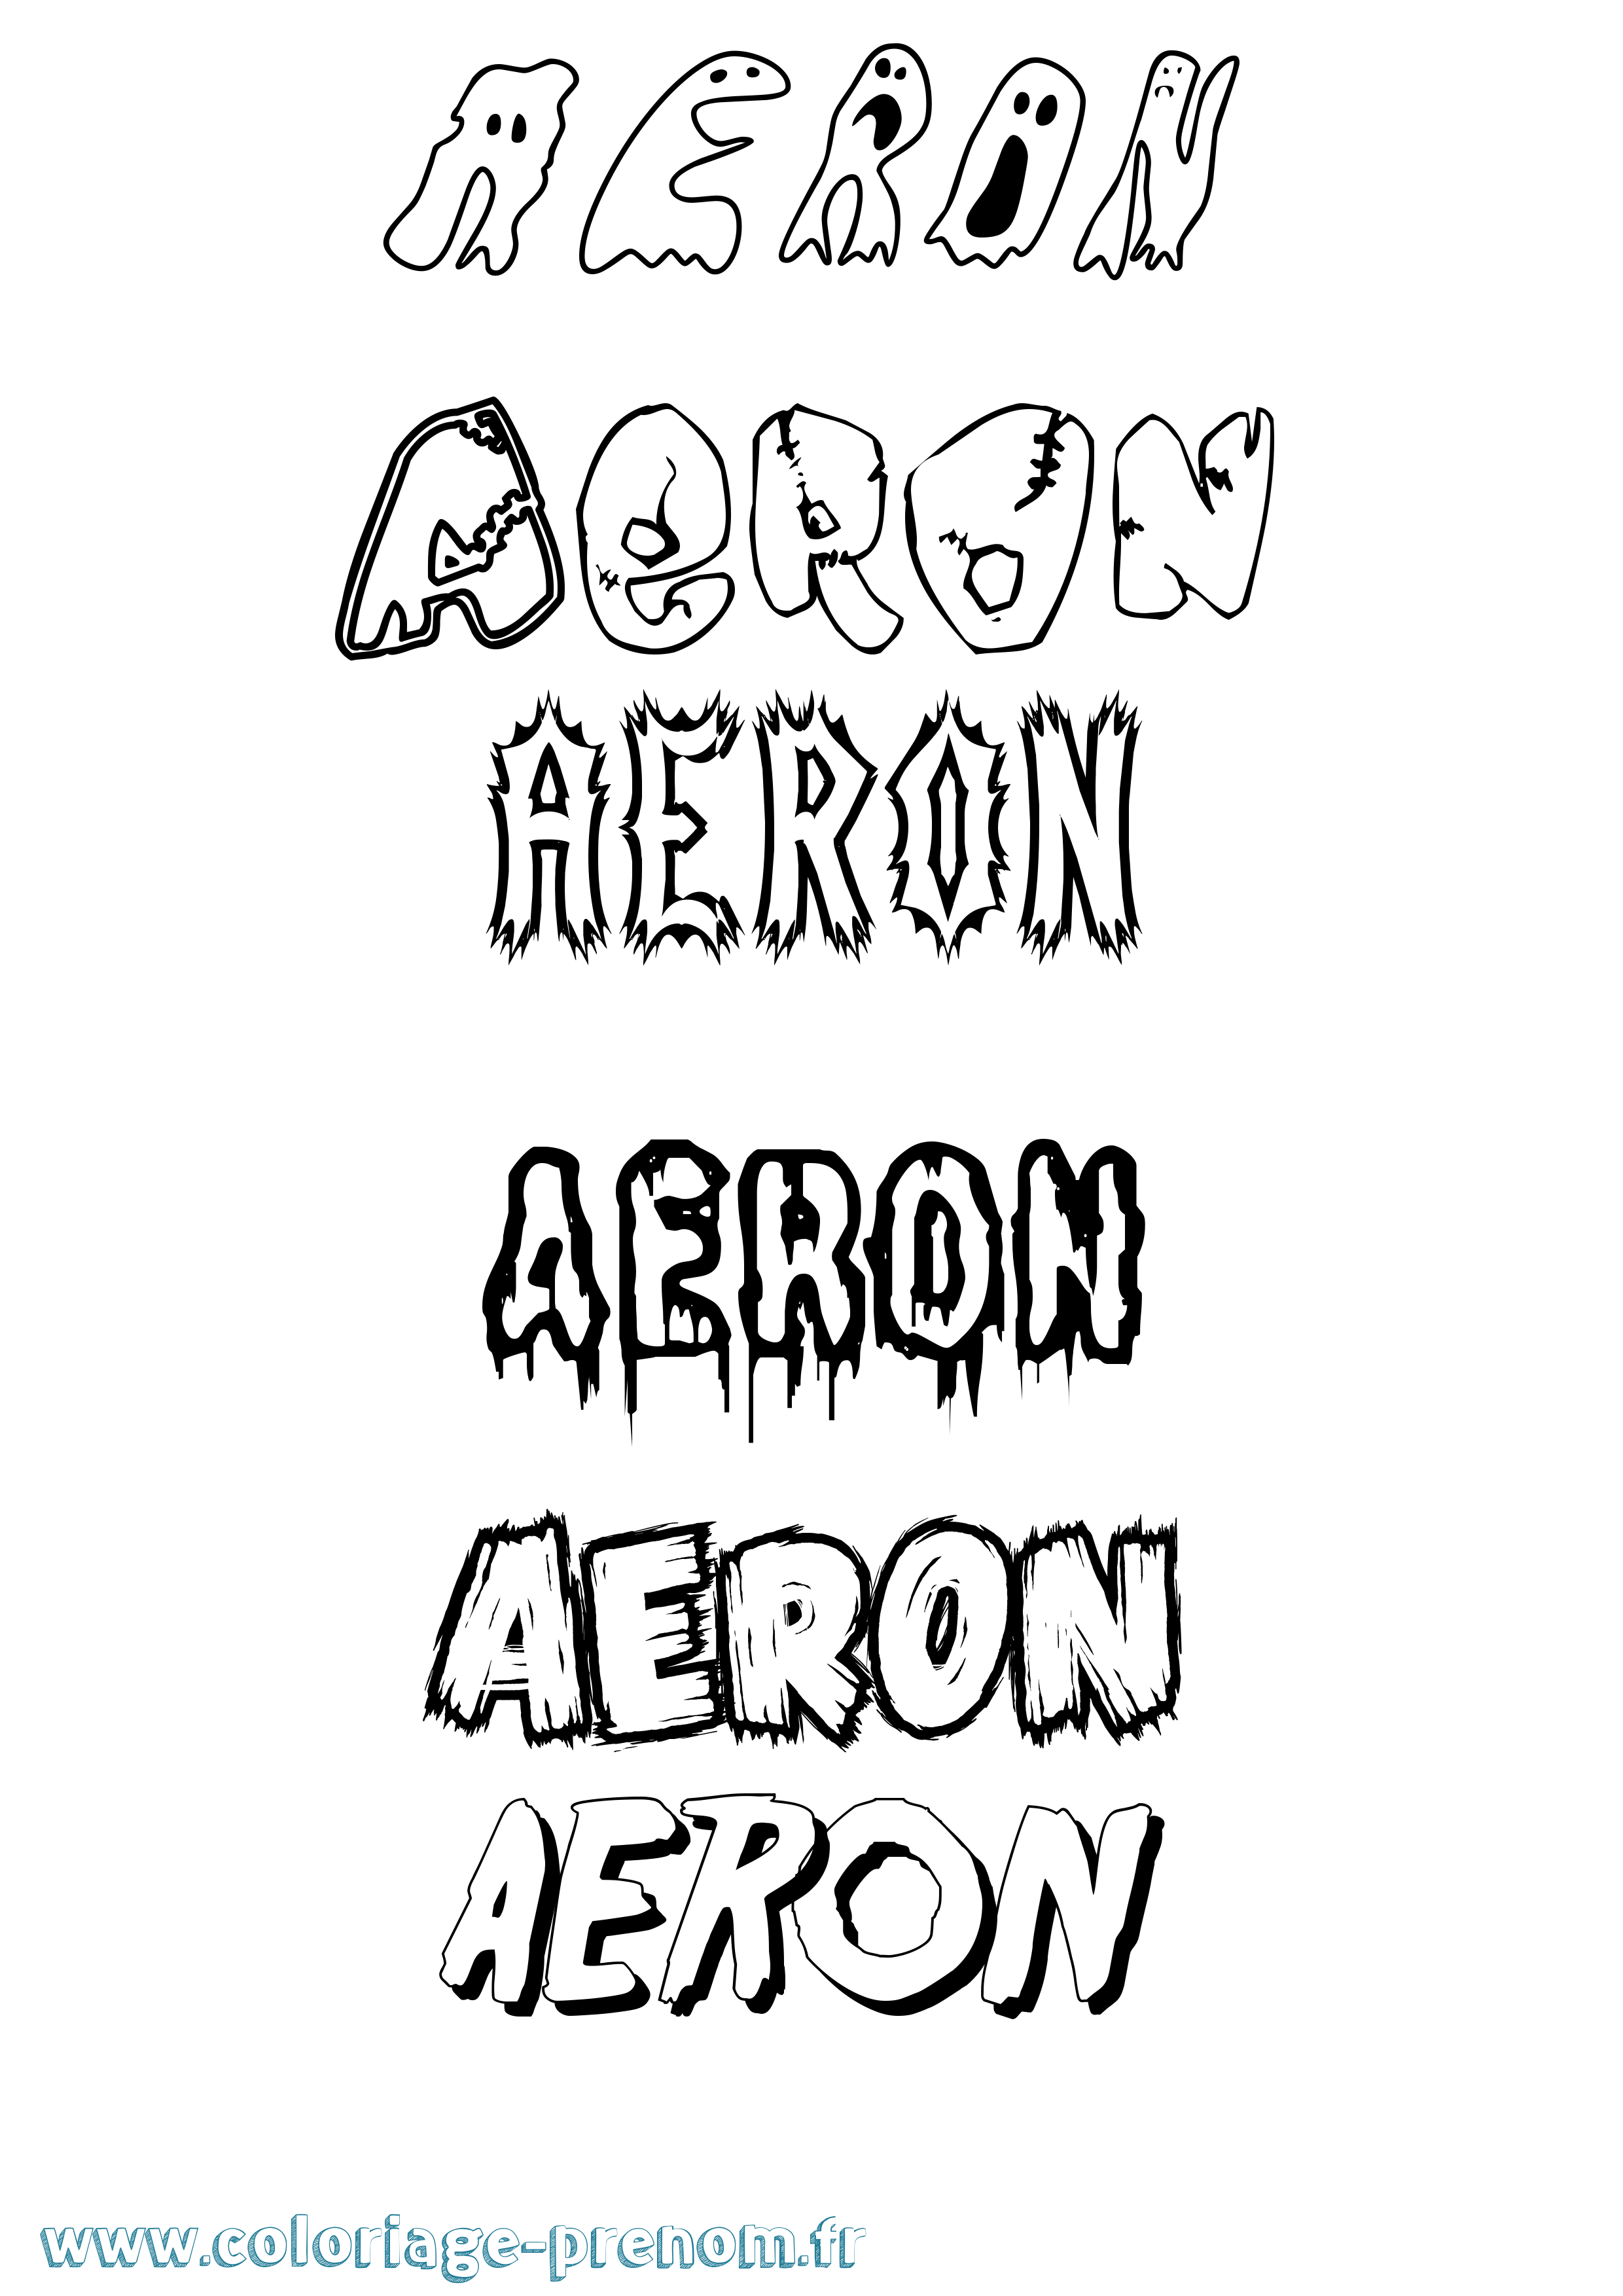 Coloriage prénom Aeron Frisson